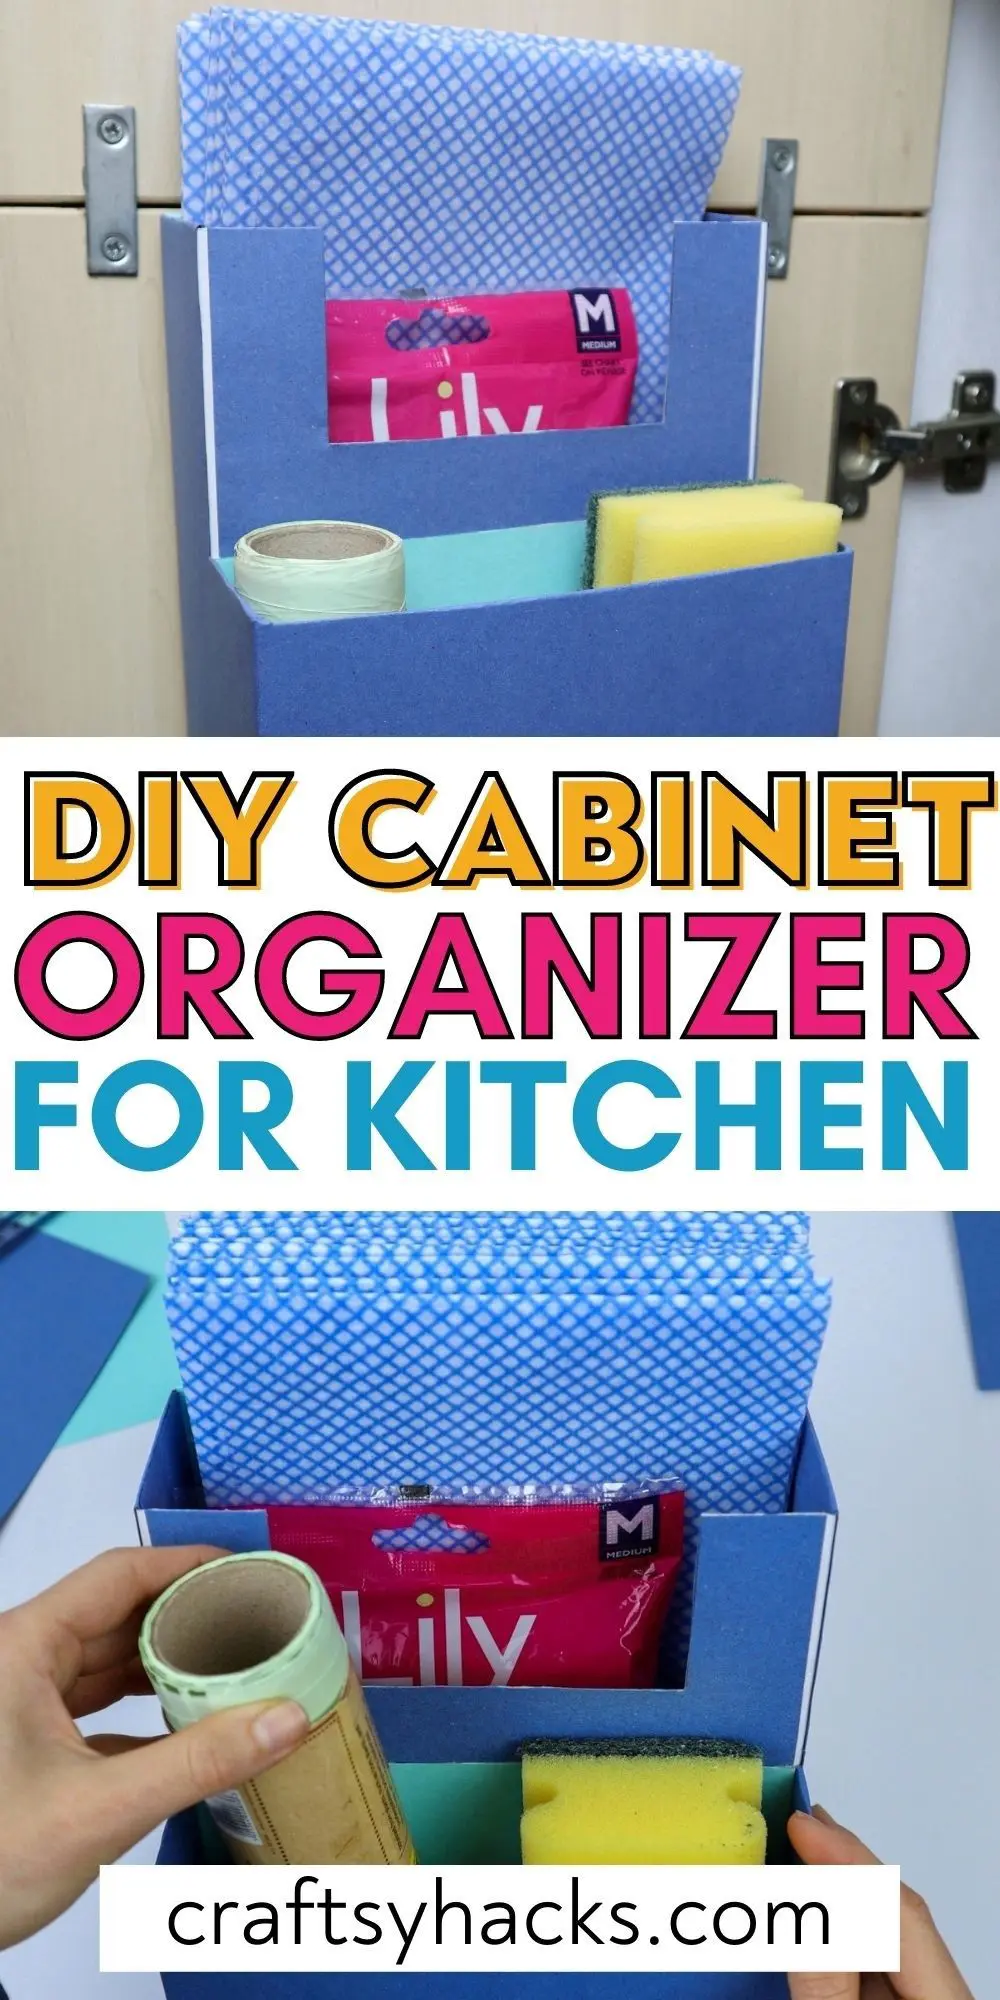 diy cabinet organizer for kitchen pinterest pin